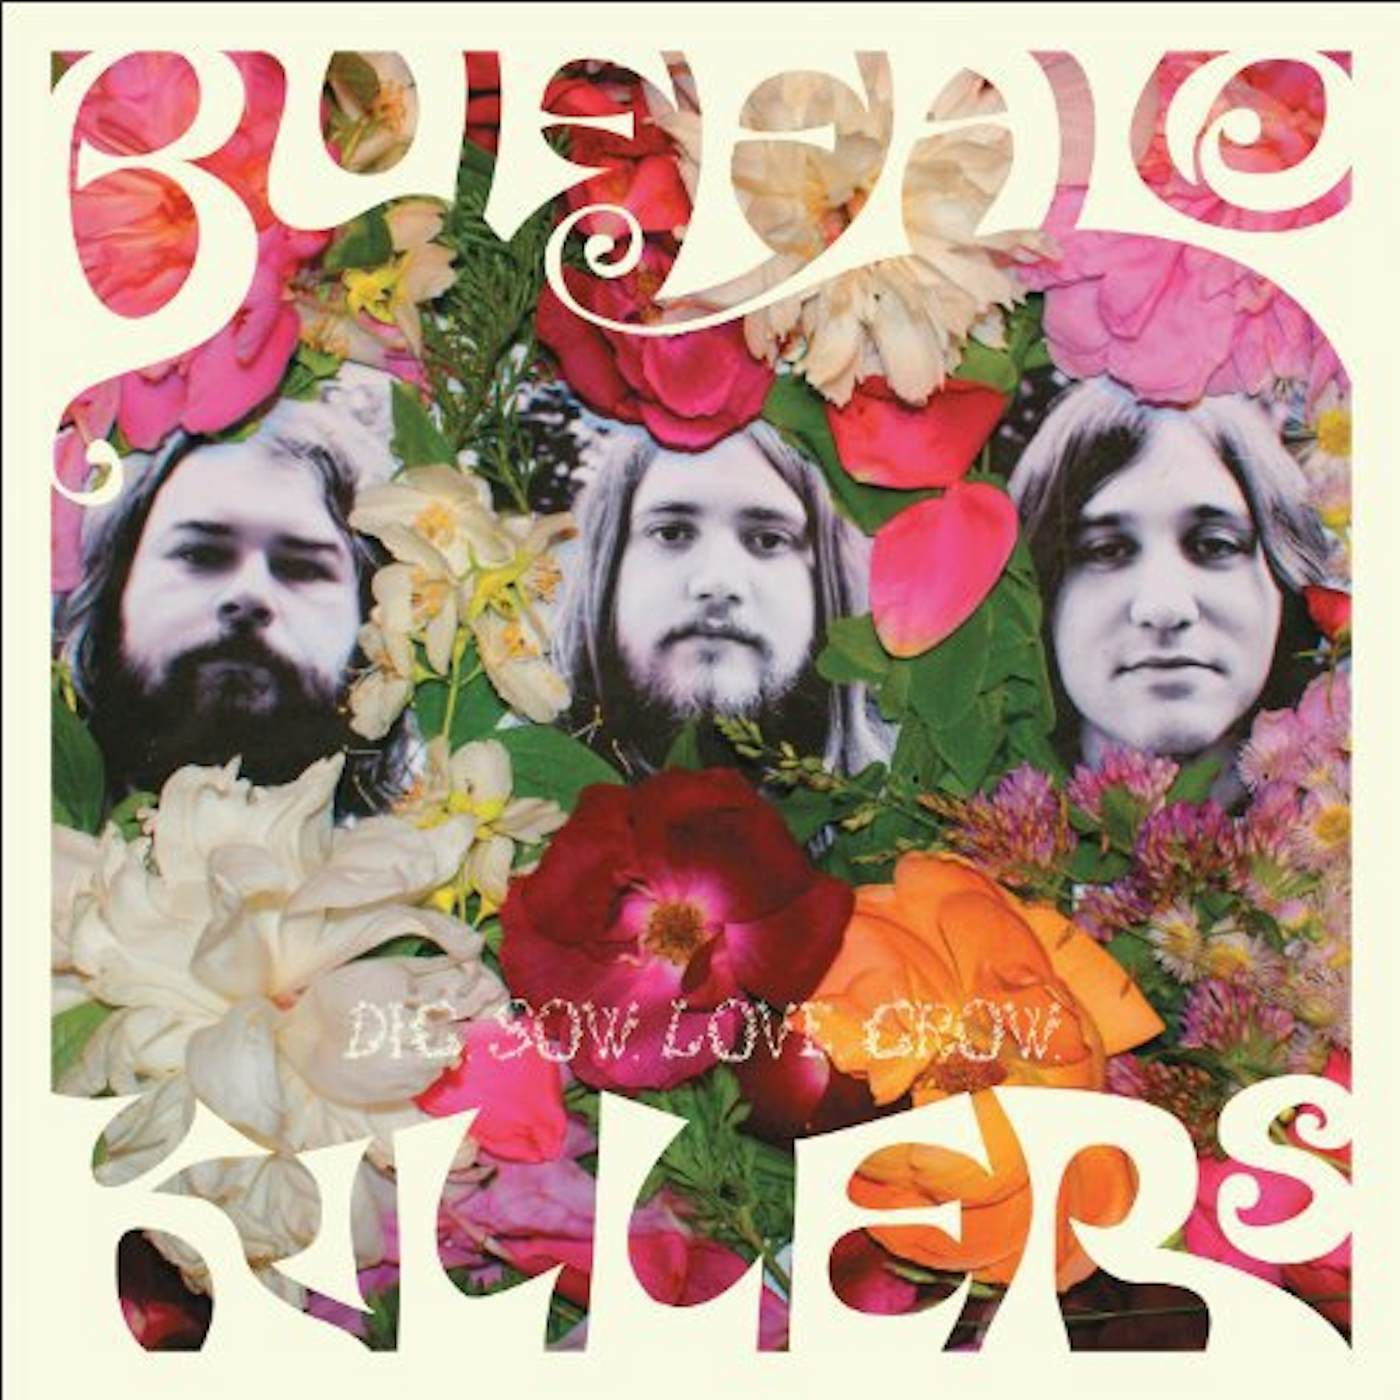 Buffalo Killers DIG SOW LOVE GROW Vinyl Record